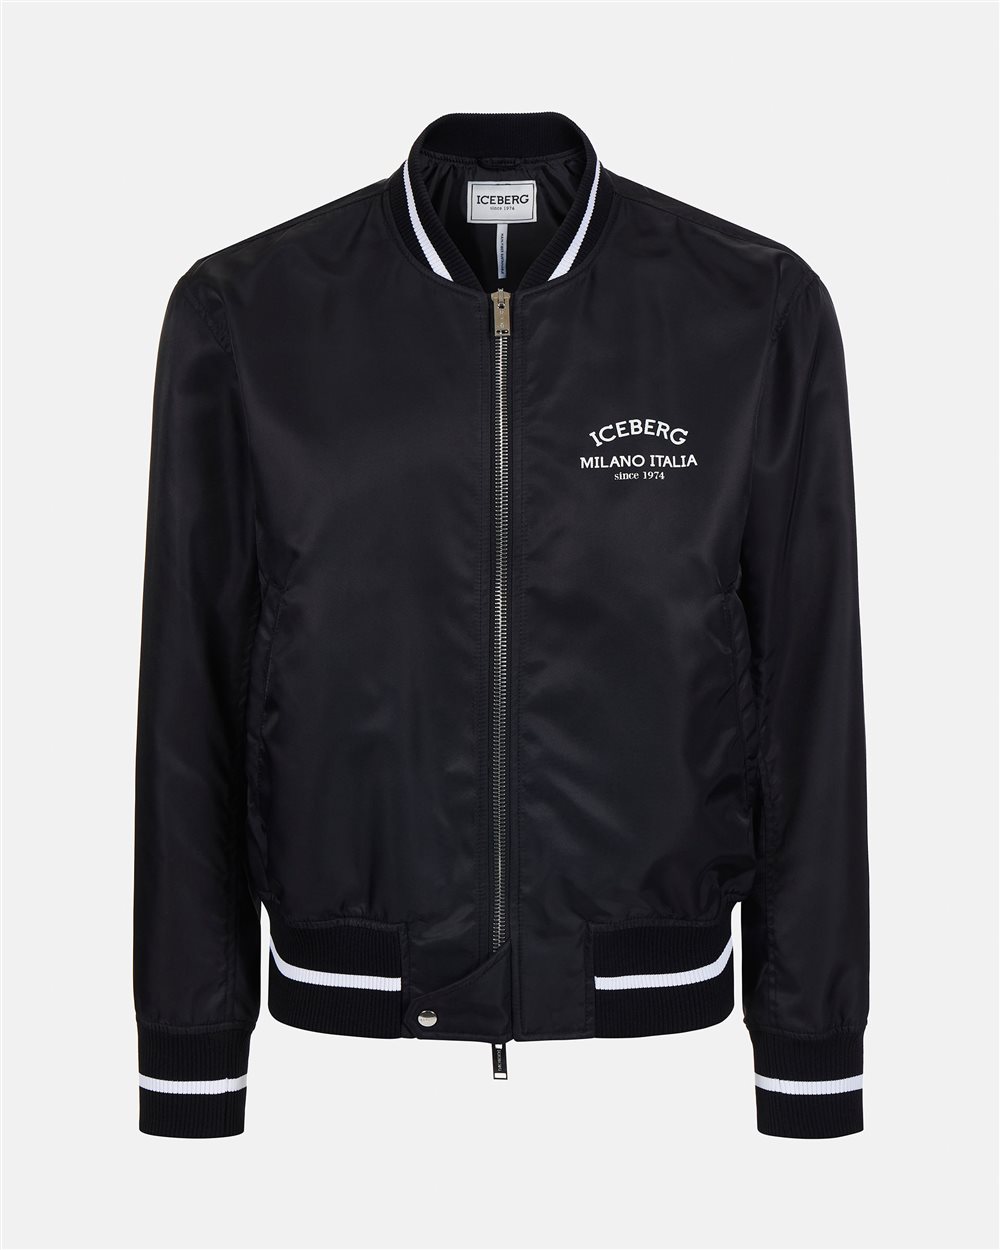 Bomber jacket with logo - Iceberg - Official Website